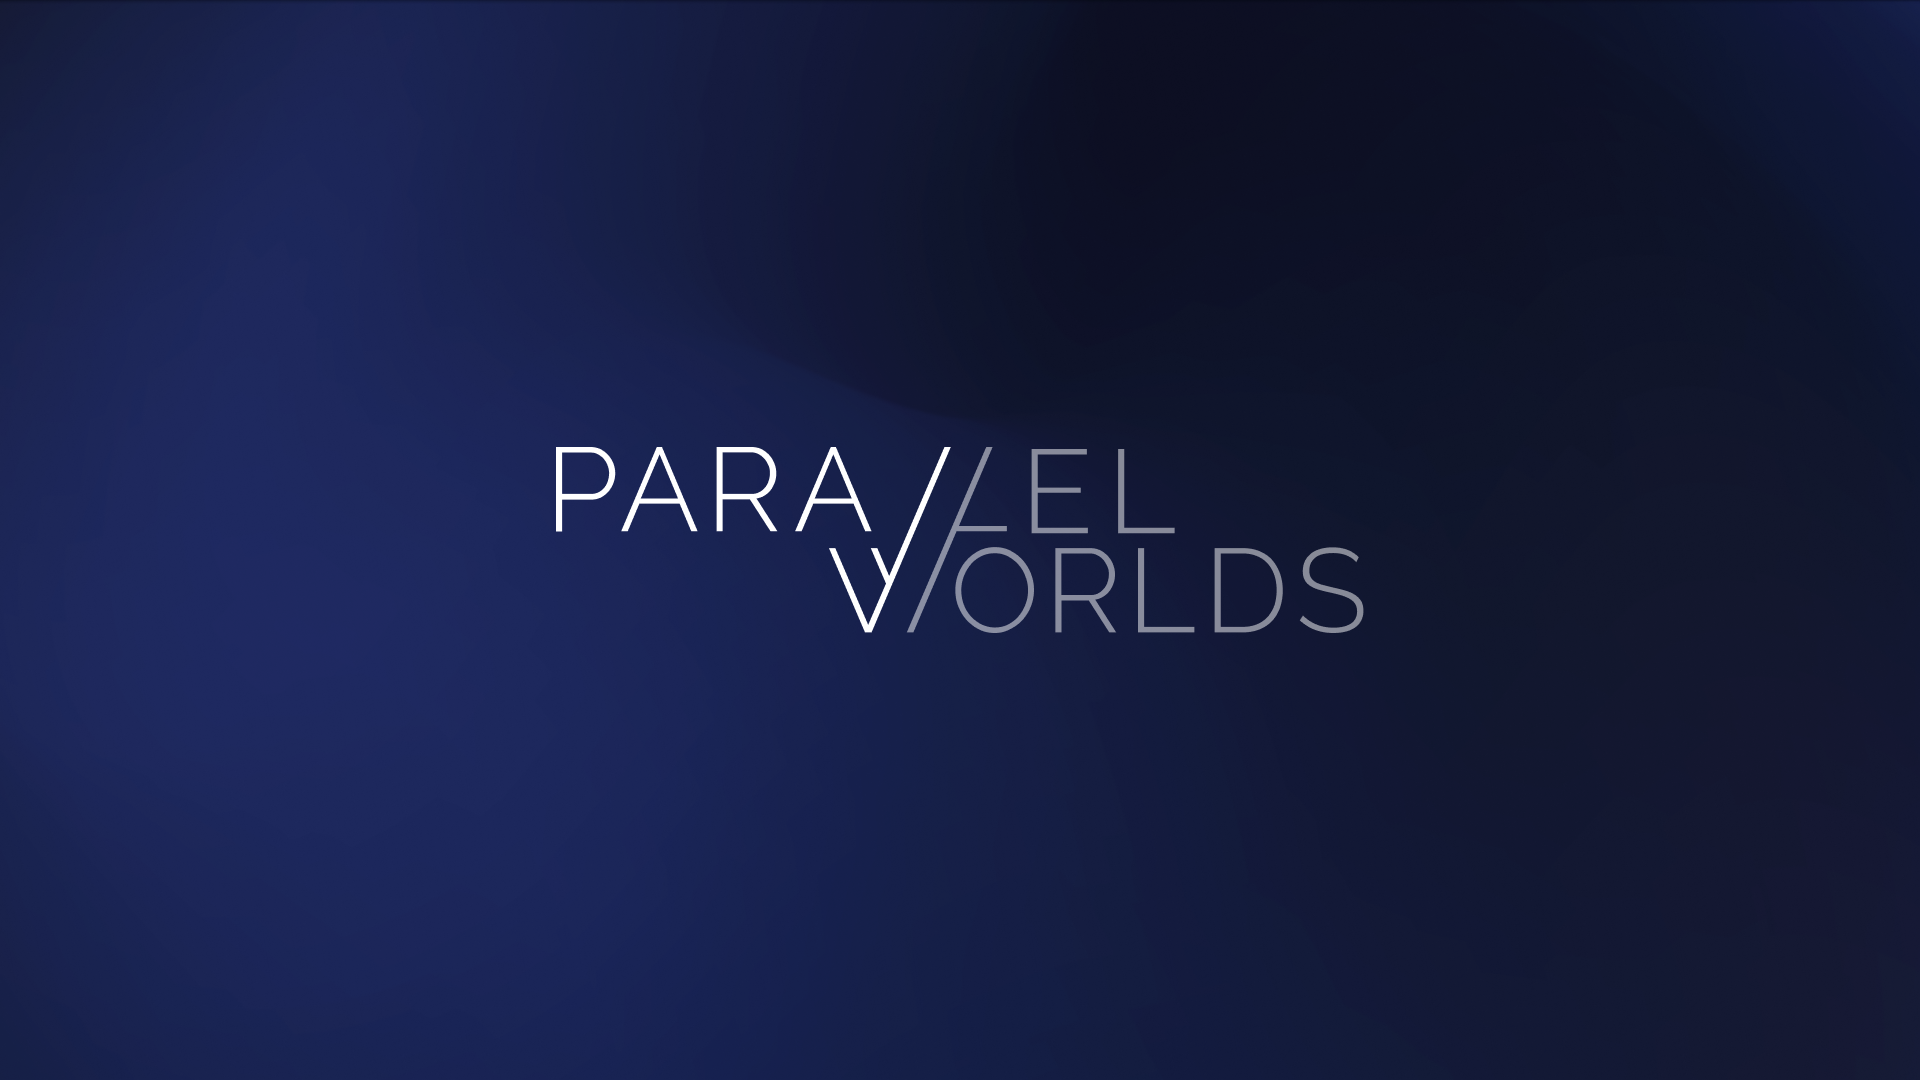 Parallel Worlds